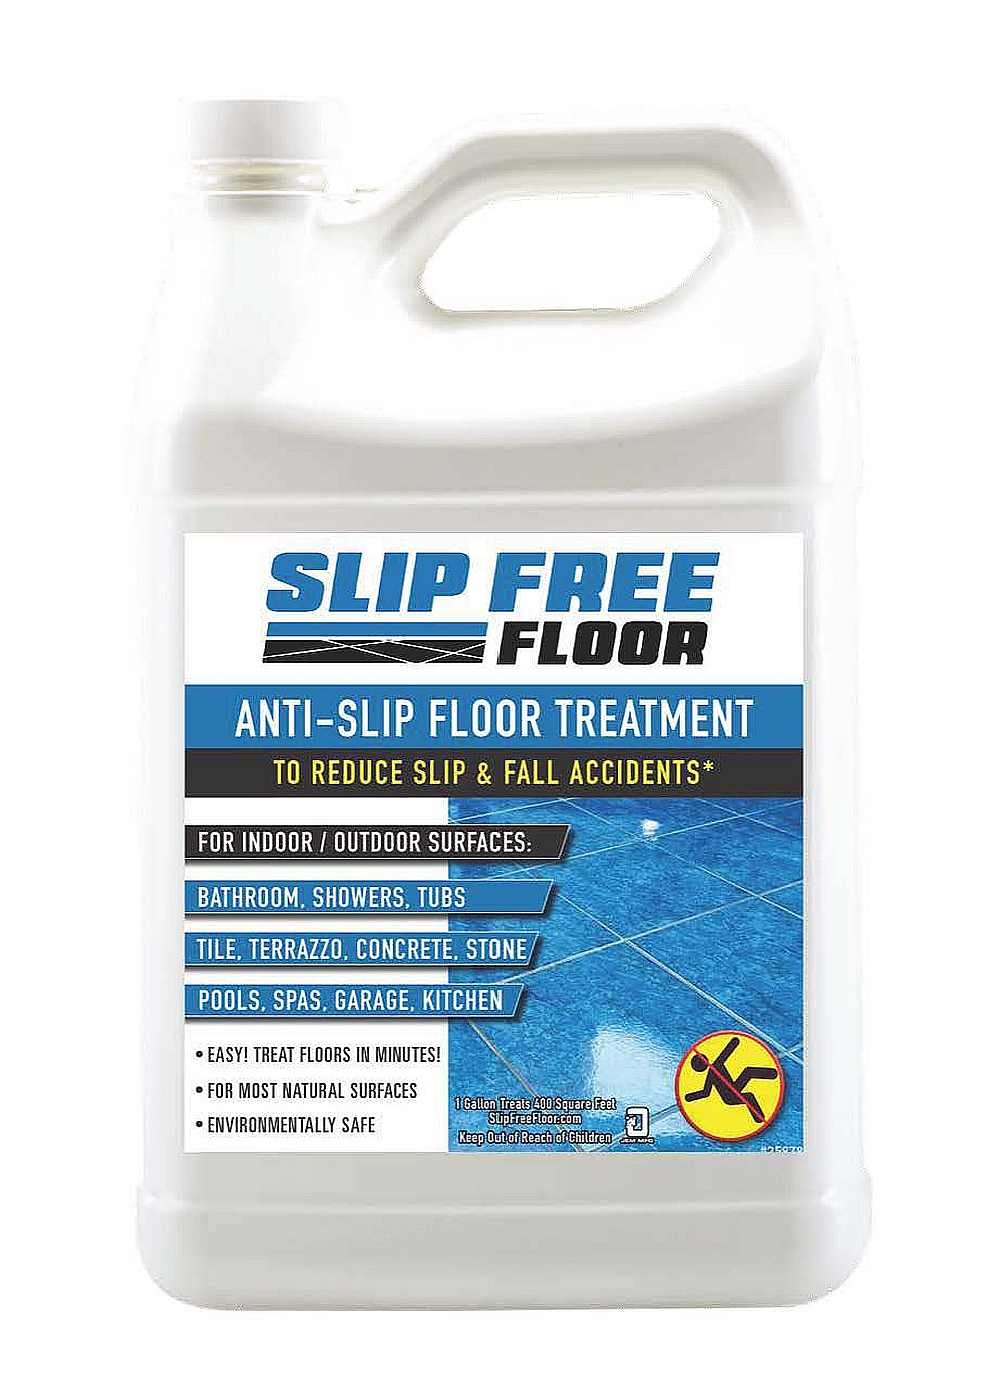 Anti-Slip Tile Treatment: Non-Slip Tile Coating (Porcelain, Ceramic + More)